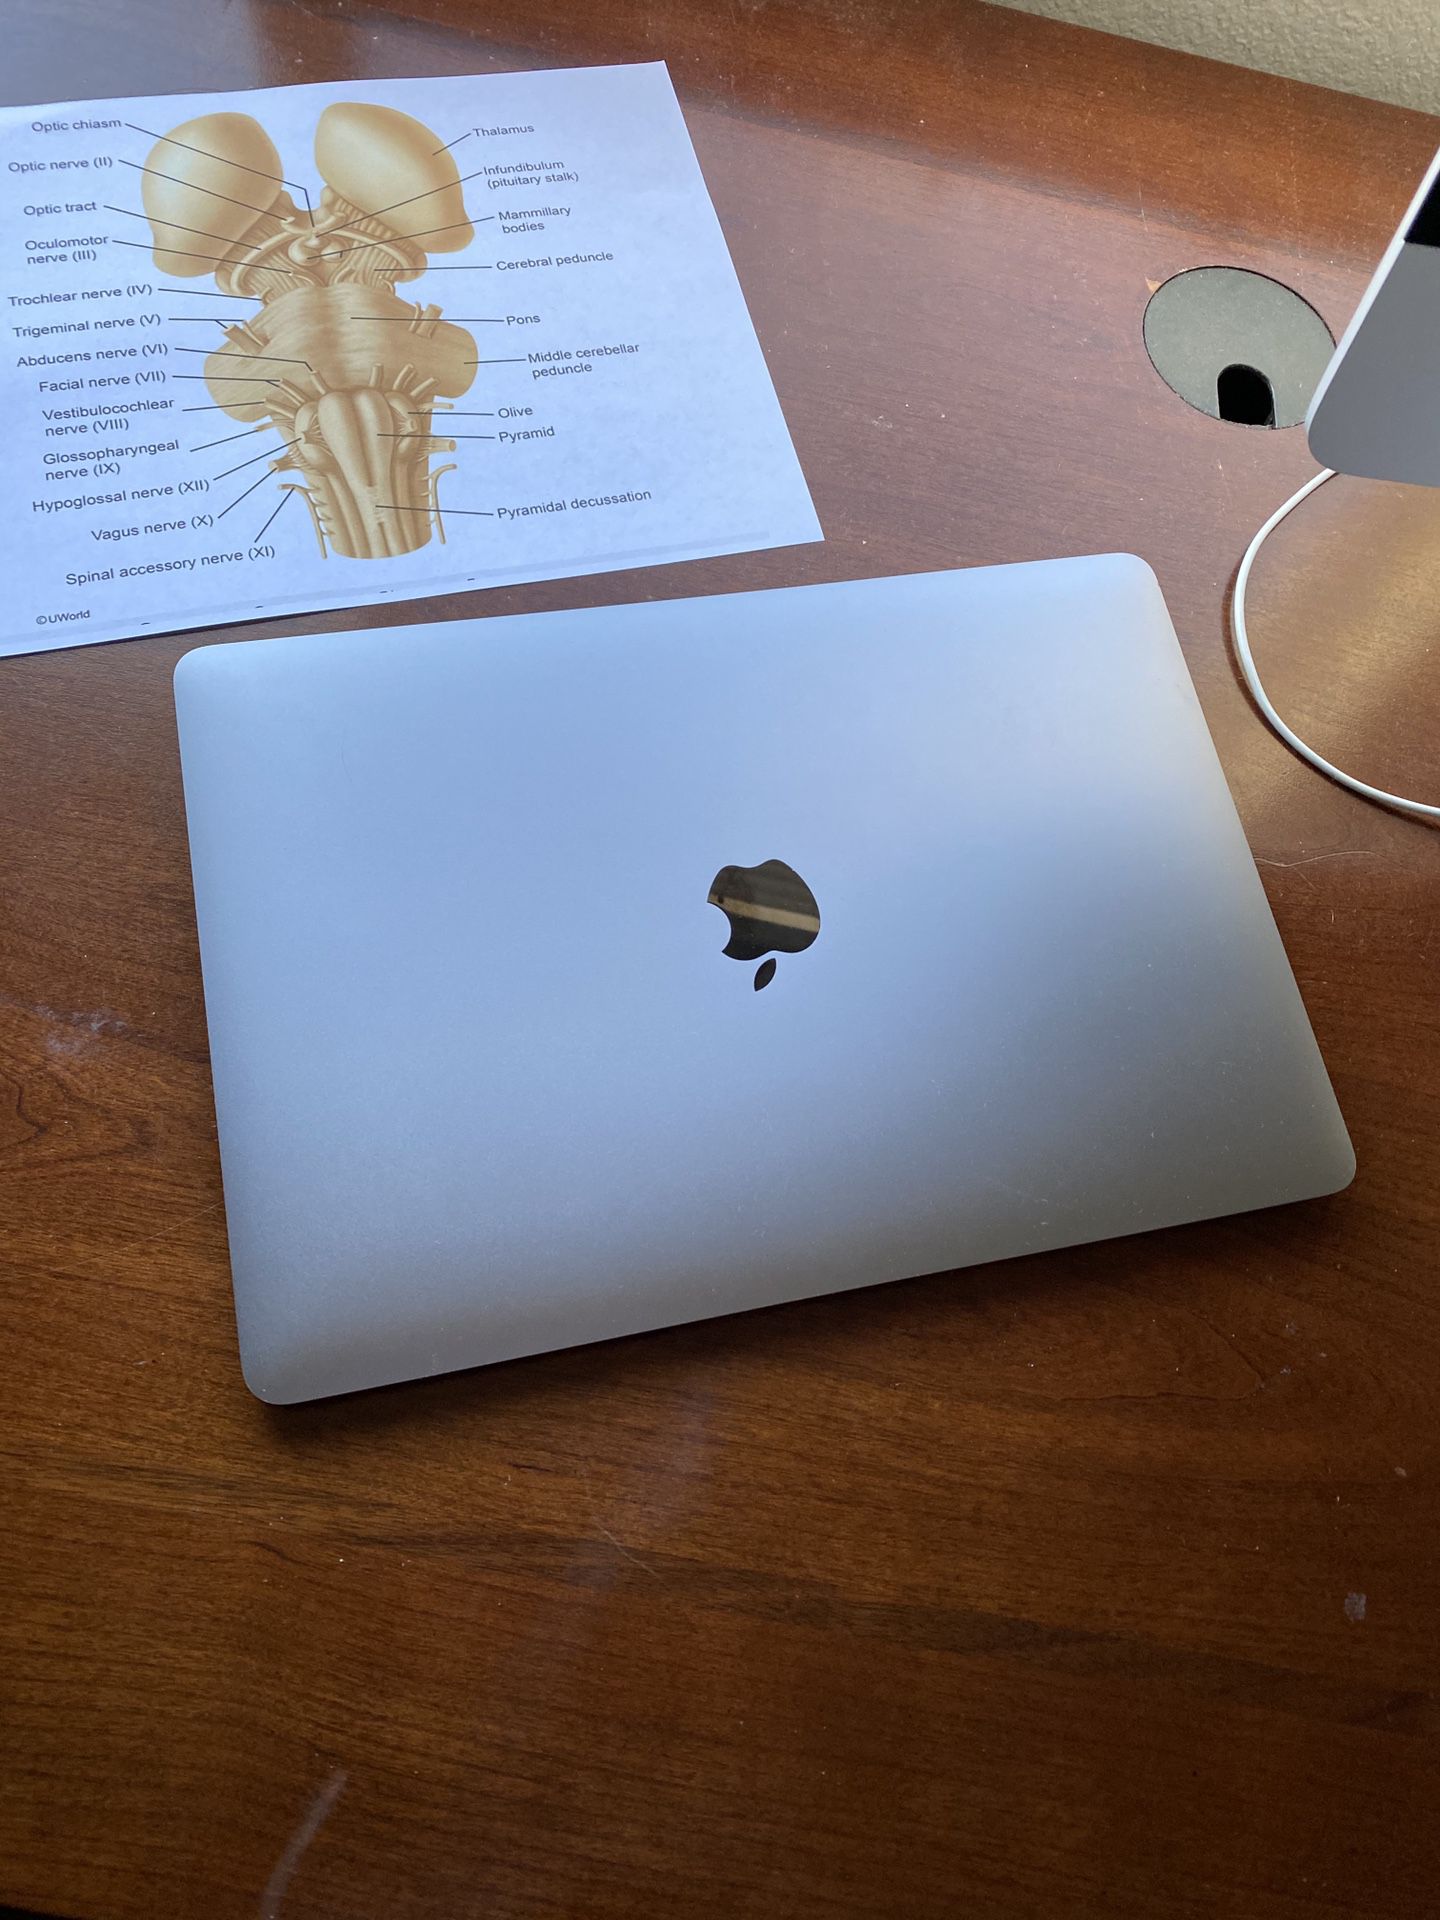 MacBook Air 13 inch, Space grey, 2018.